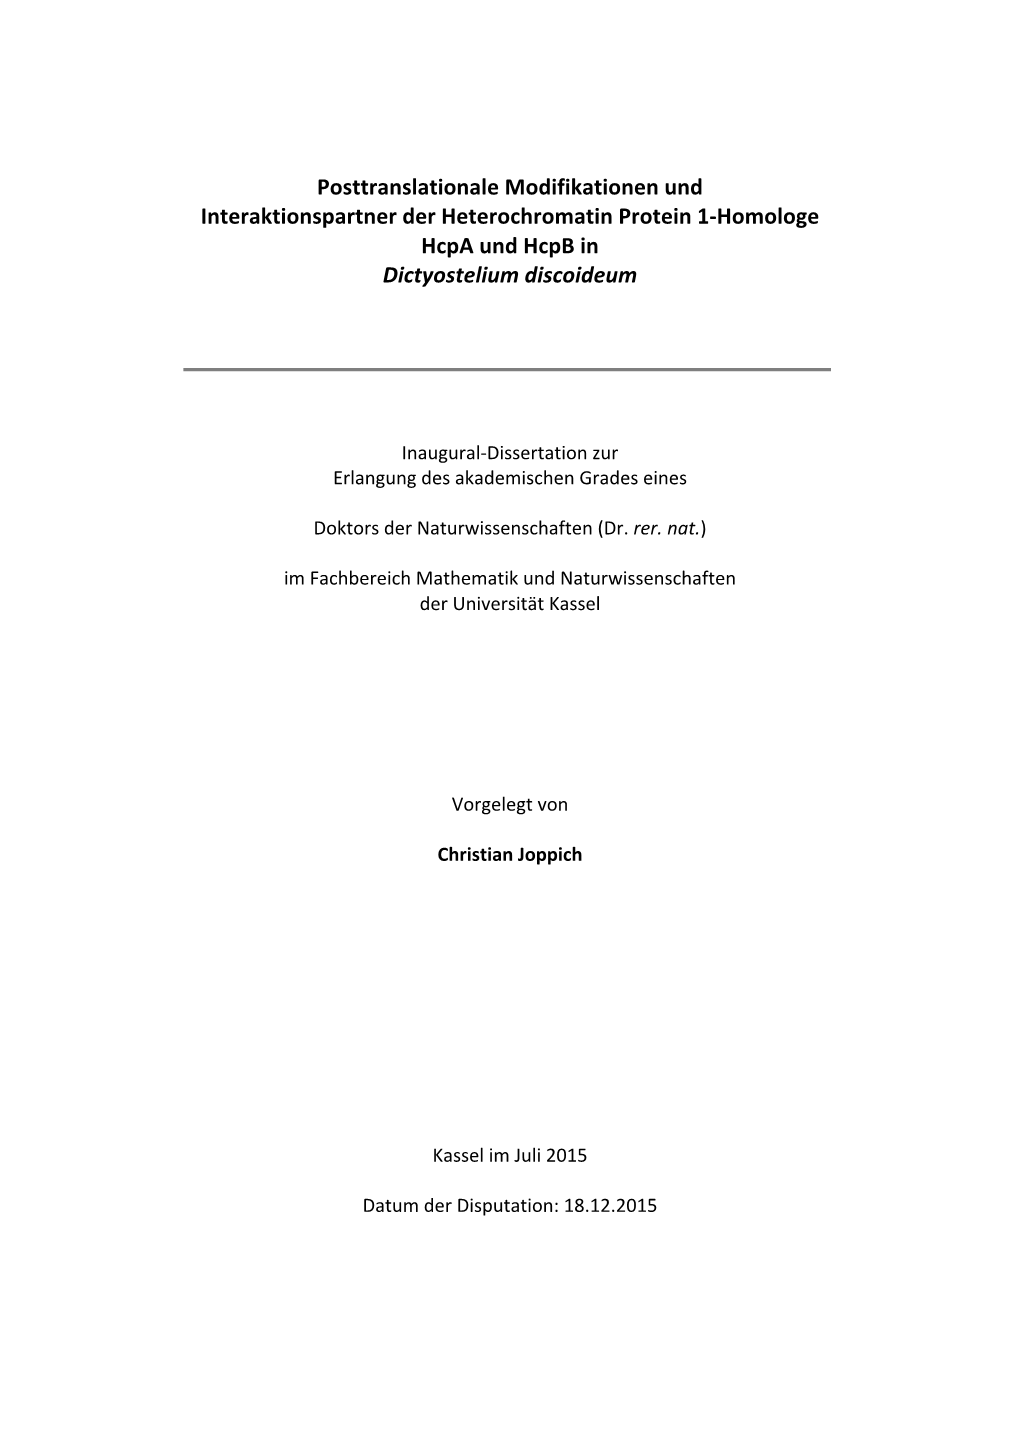 Dissertationchristianjoppich.Pdf (6.541Mb)